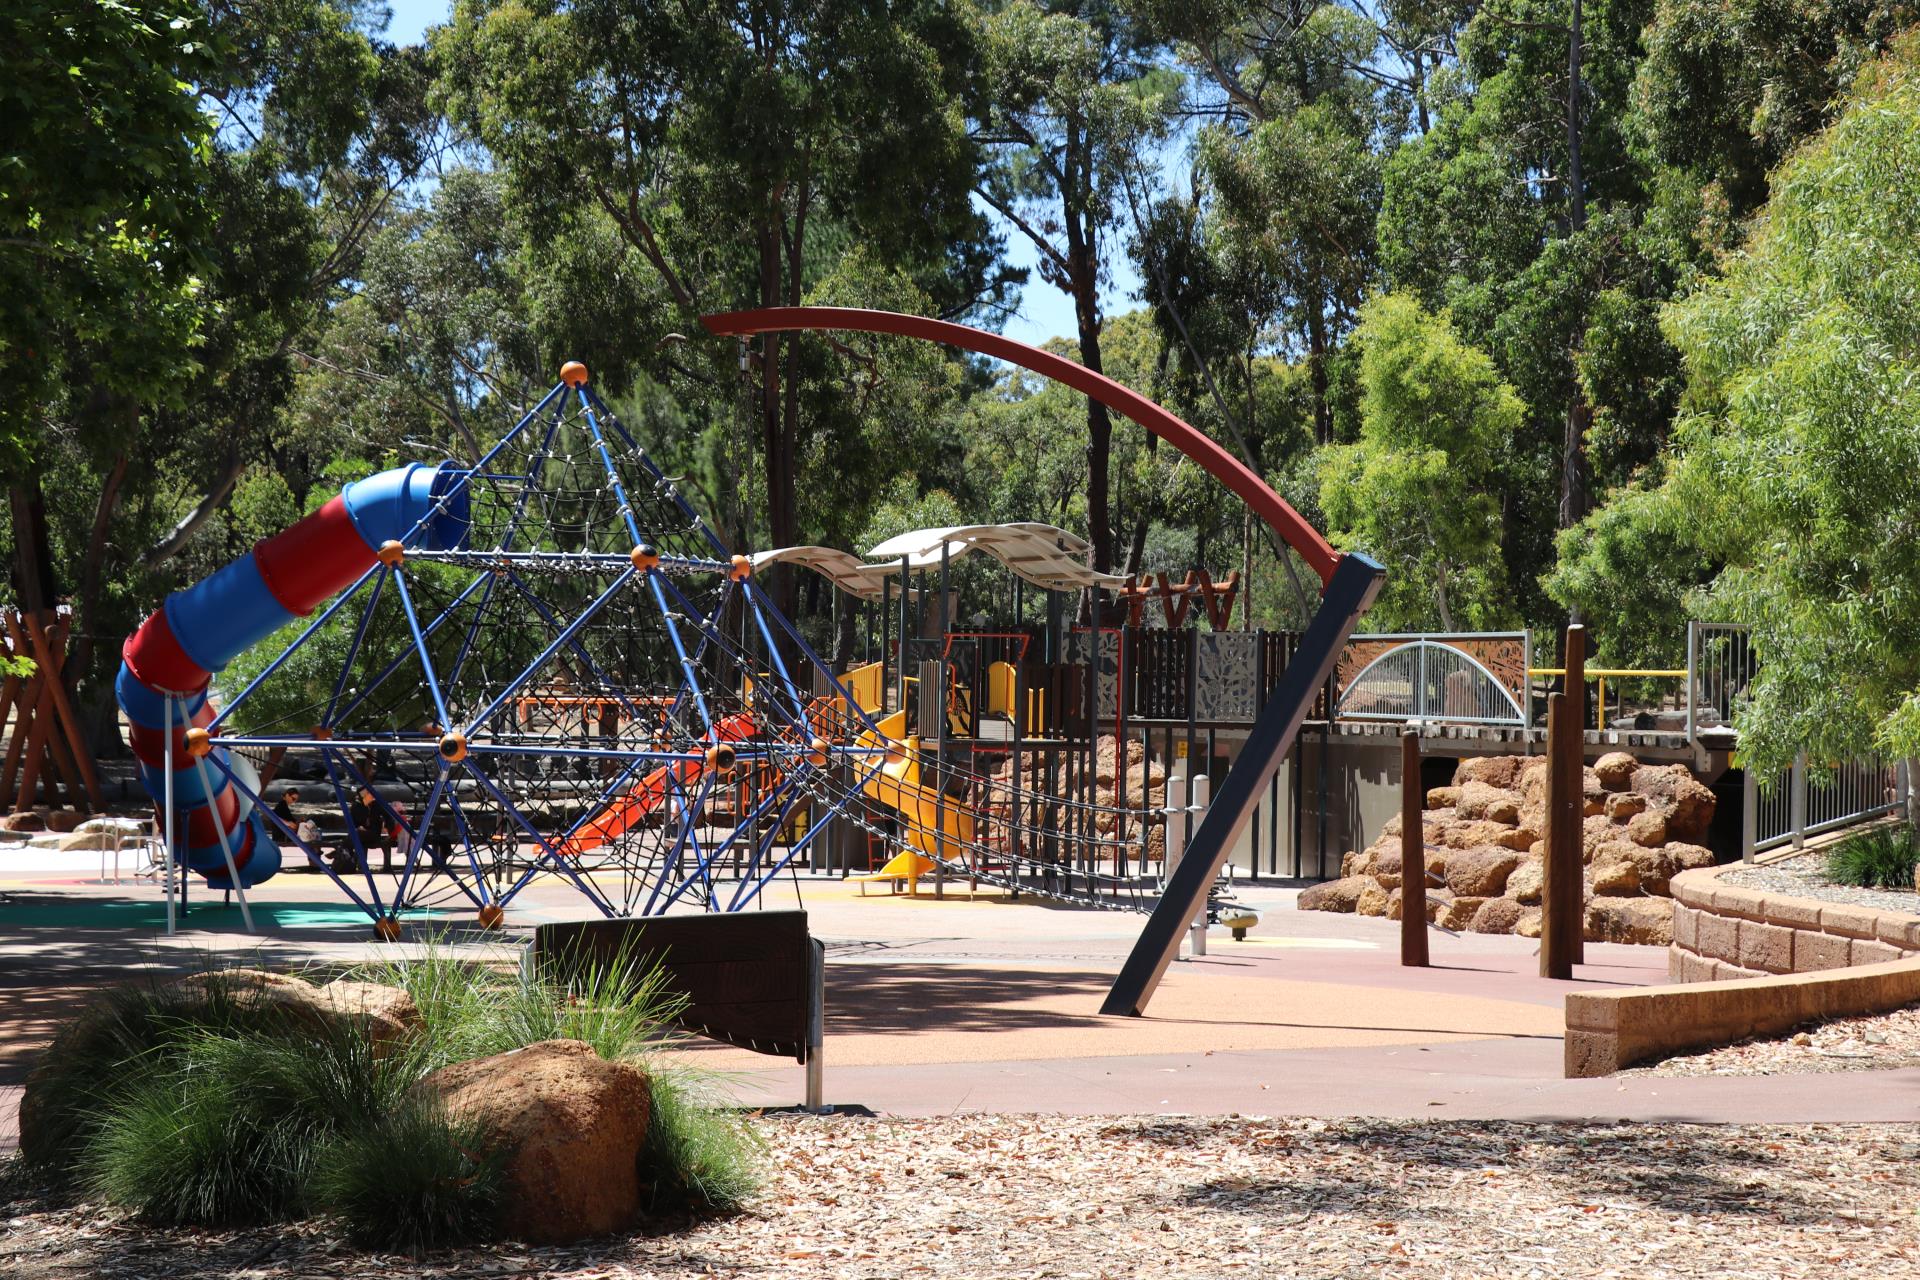 Sculpture Park Playground Closure